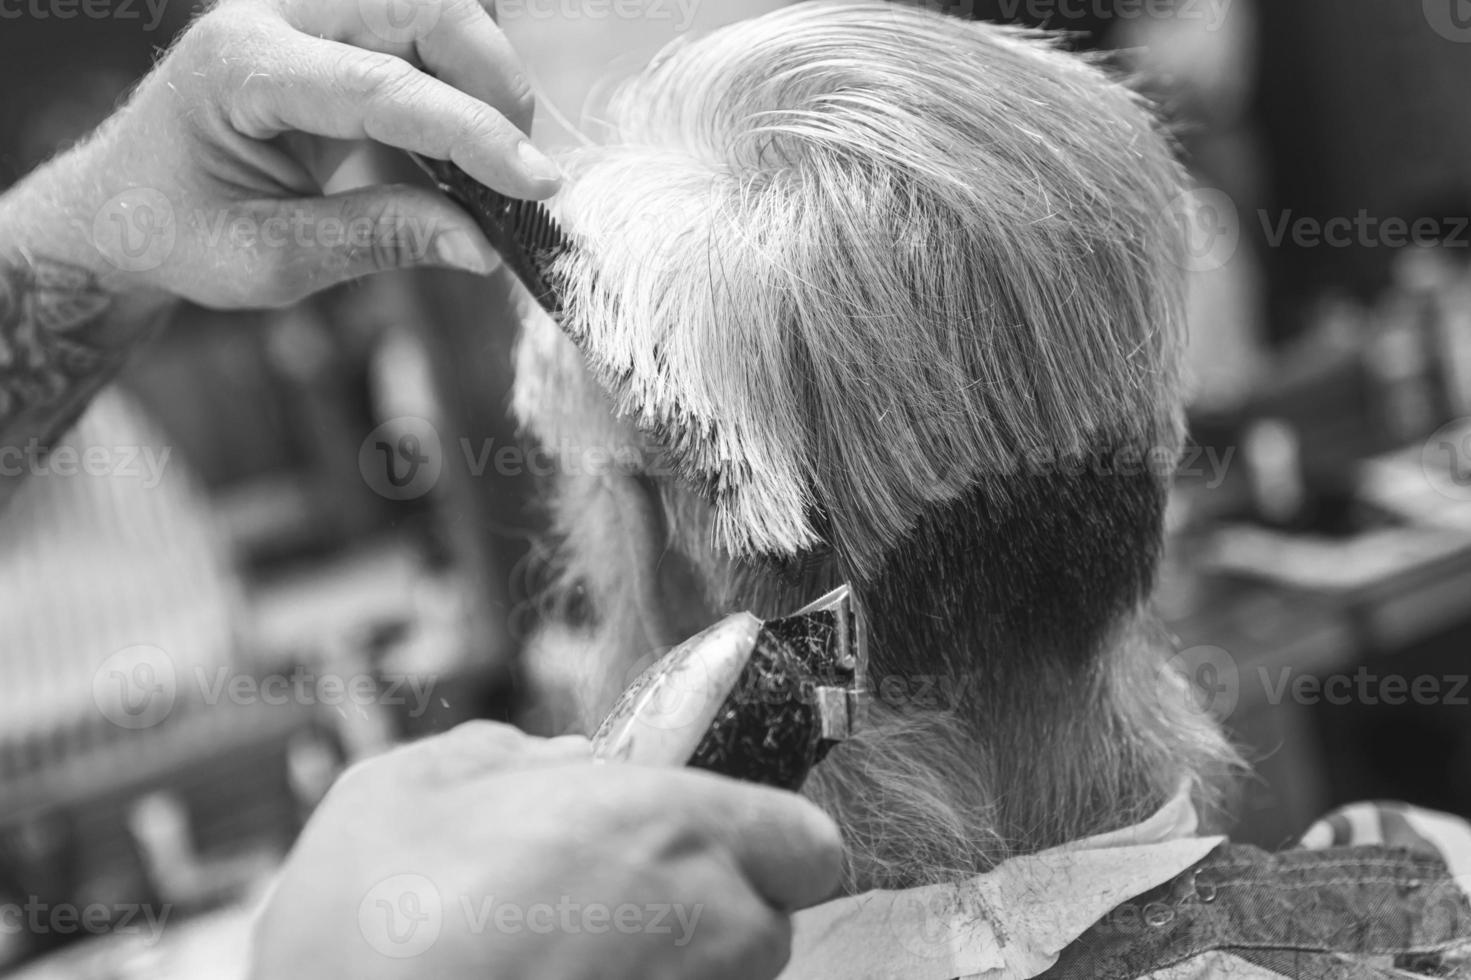 kapper maken elegant kapsel voor oud Mens foto